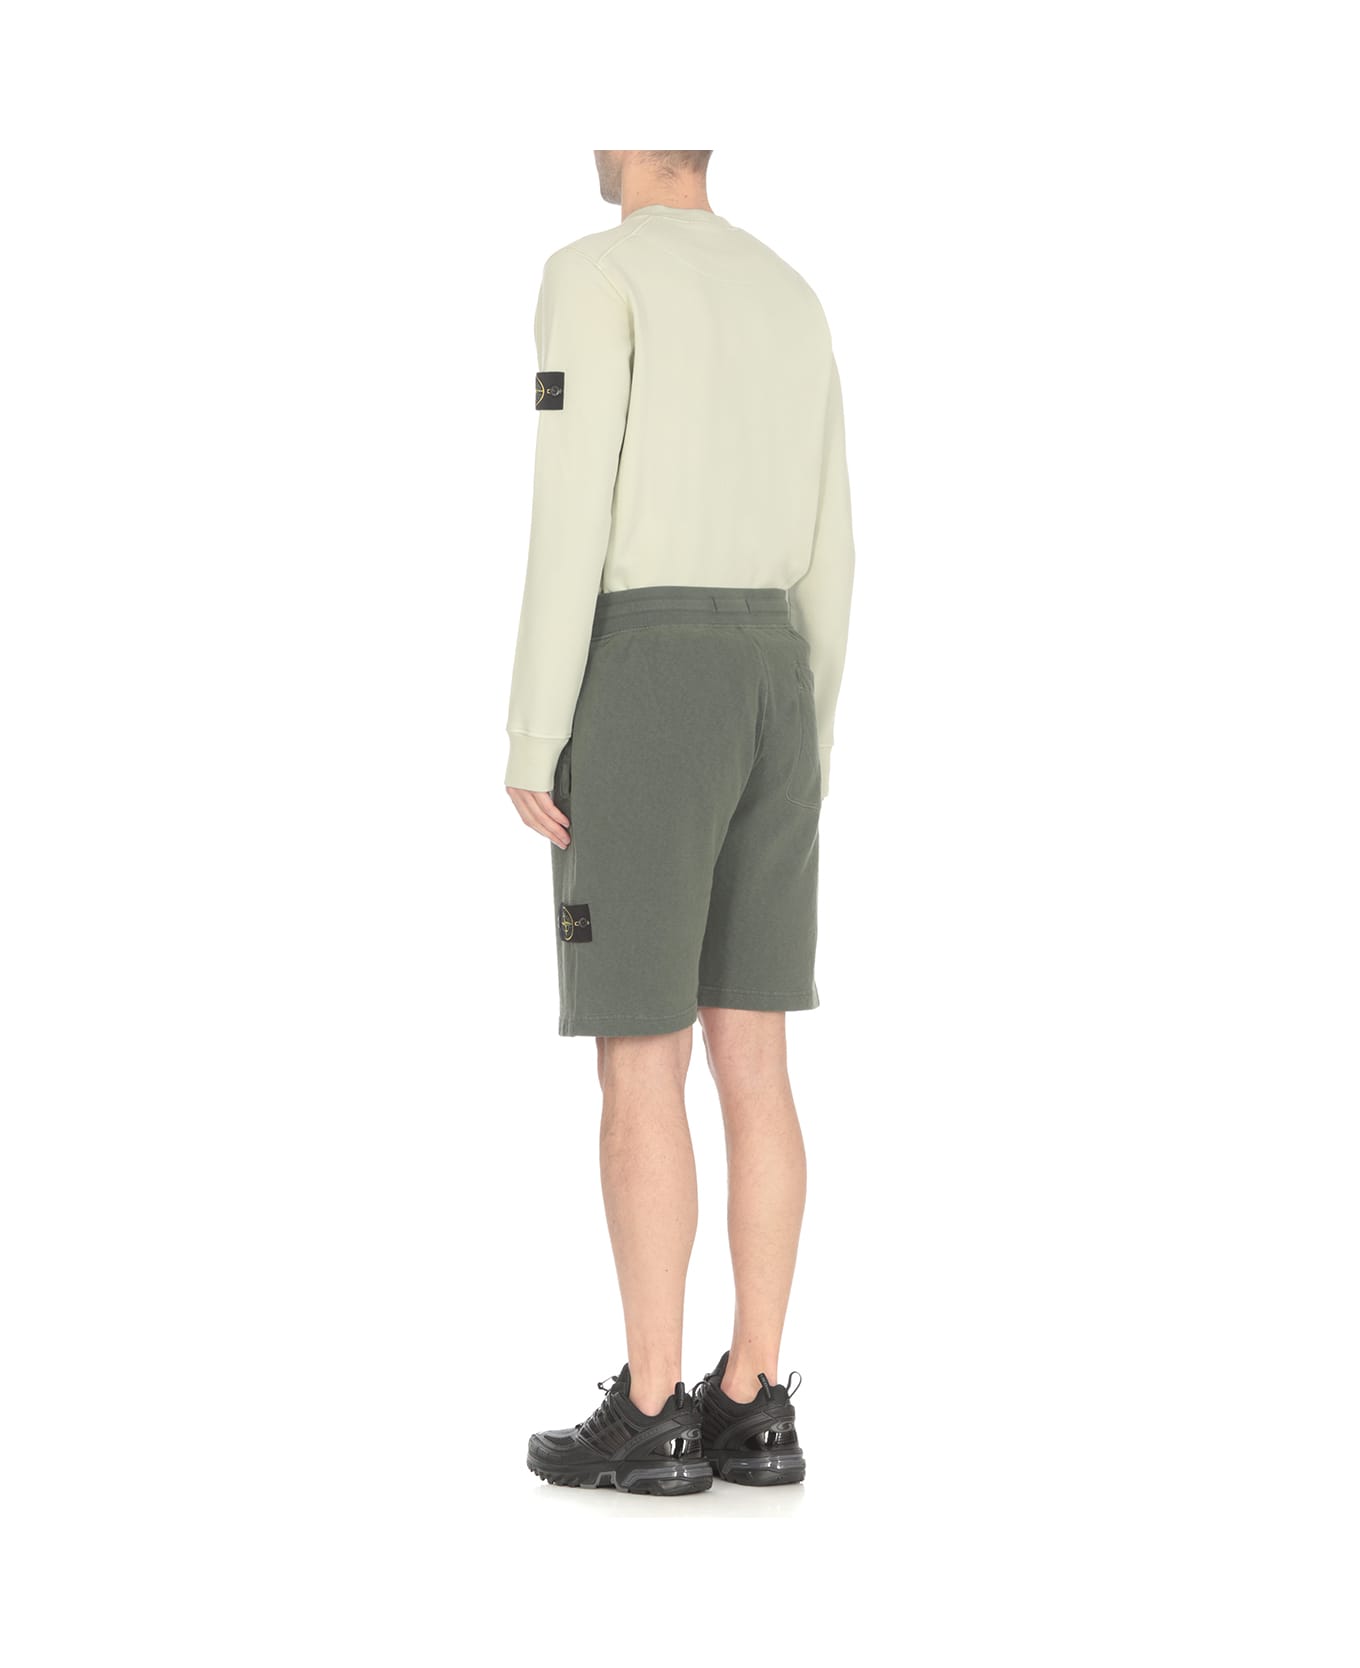 Stone Island Cotton Bermuda Shorts - Green